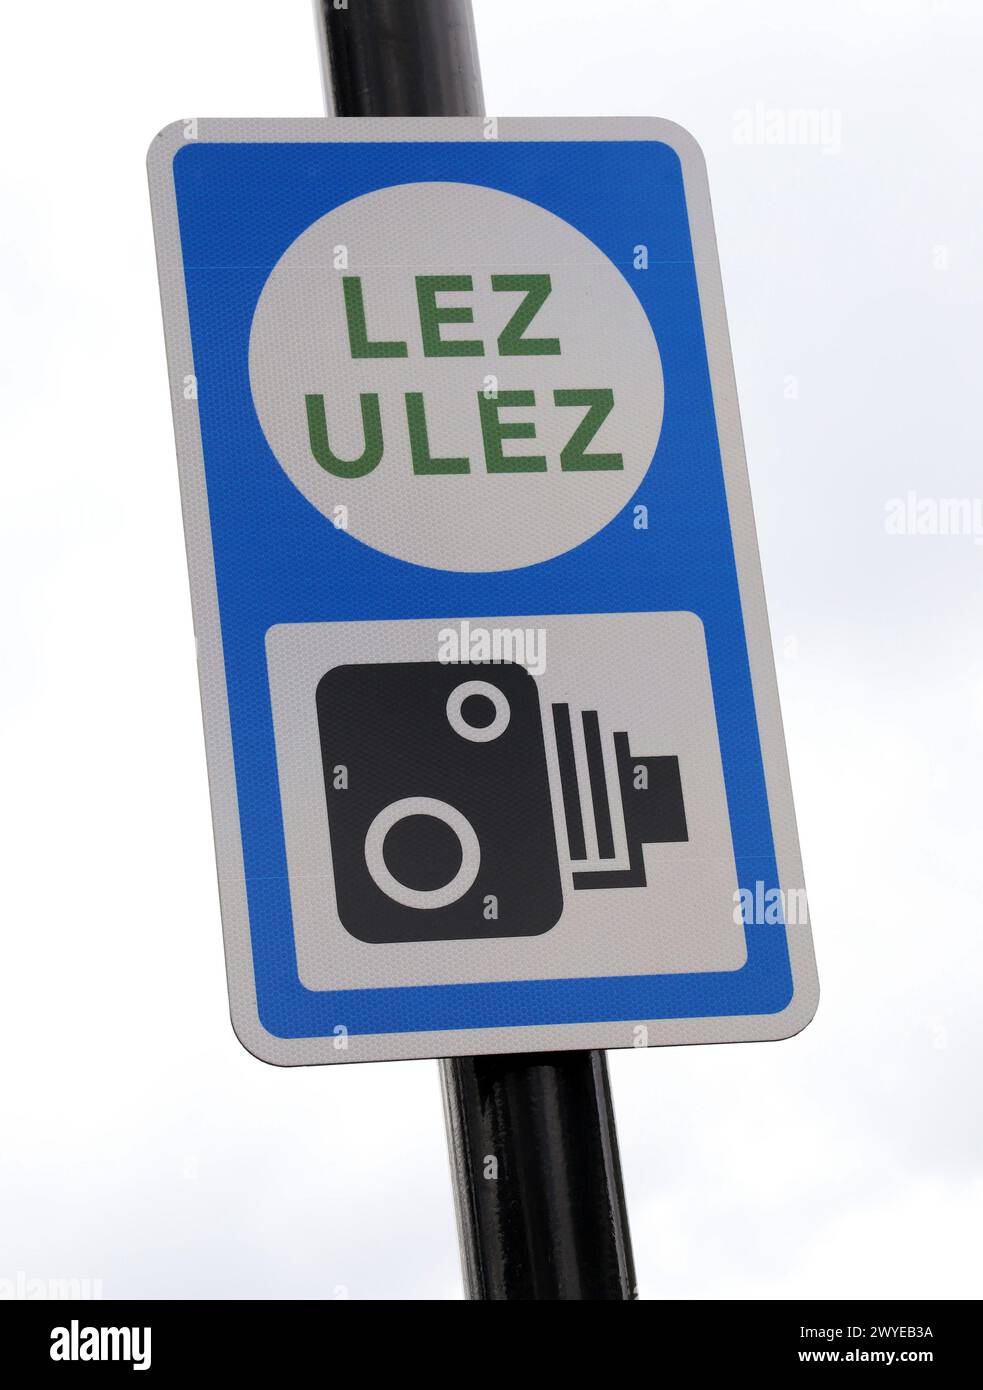 LEZ/ULEZ sign in London, England. Stock Photo